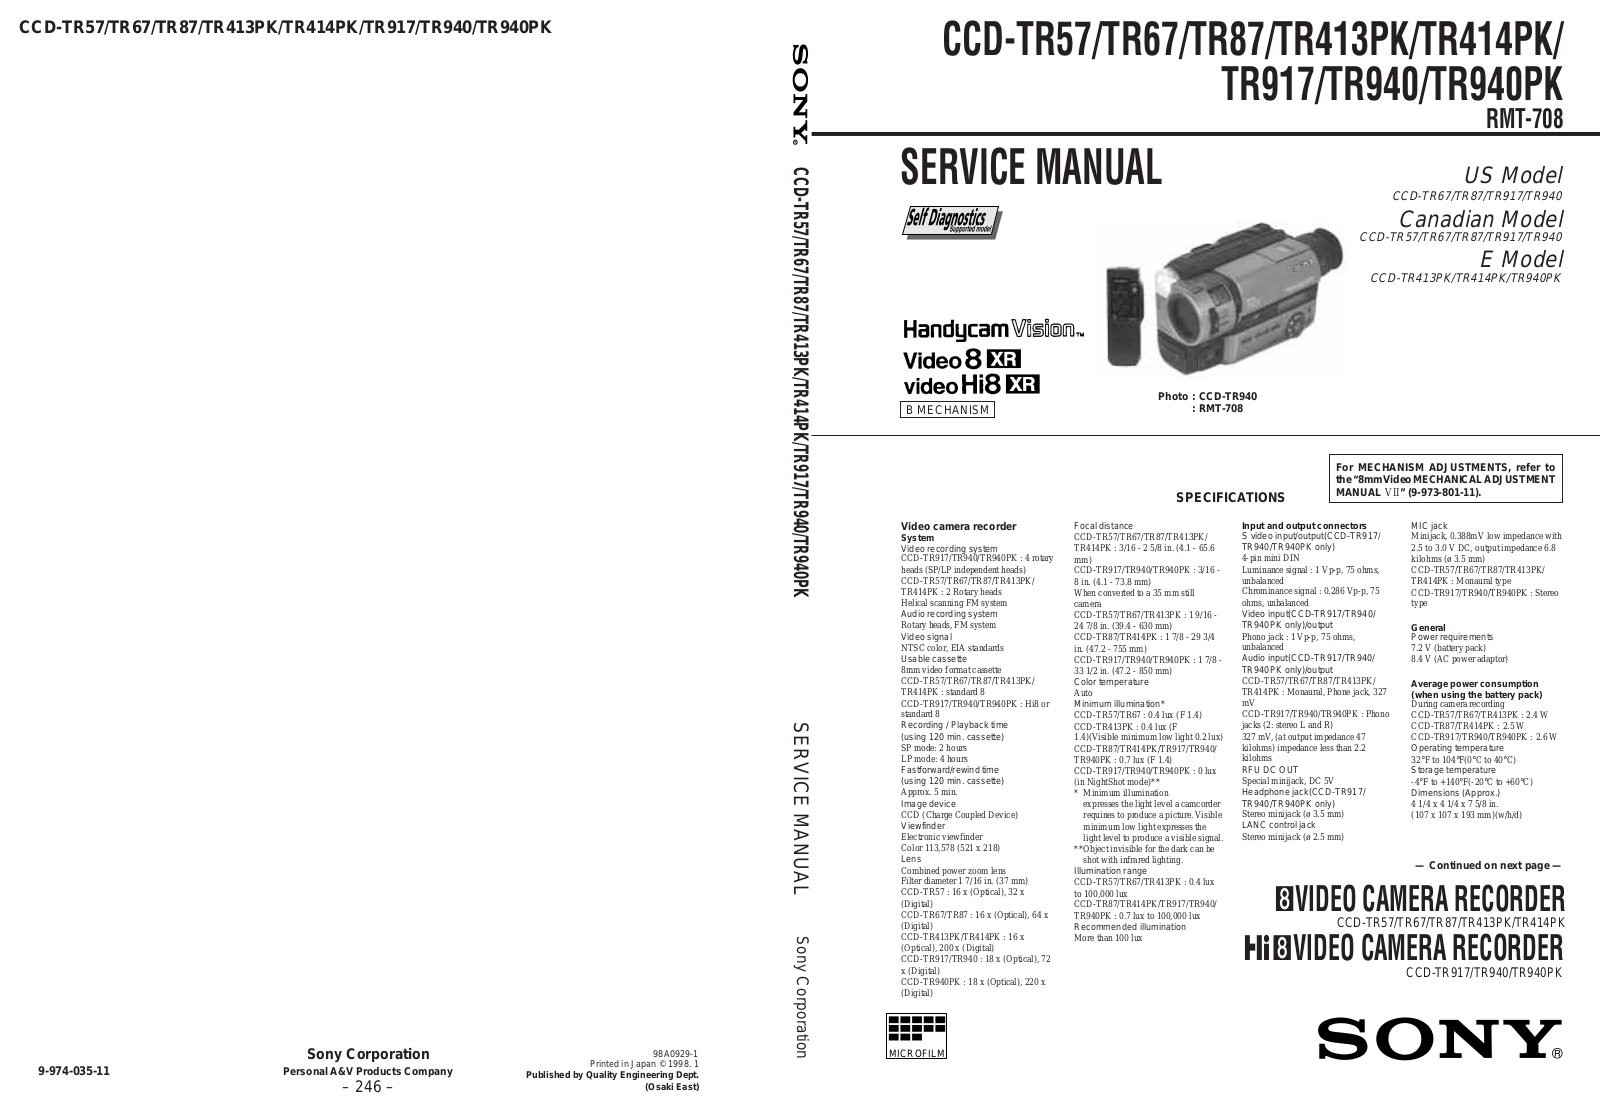 Sony CCD-TR940, CCD-TR940PK, CCD-TR917, CCD-TR414PK, CCD-TR87 Service Manual